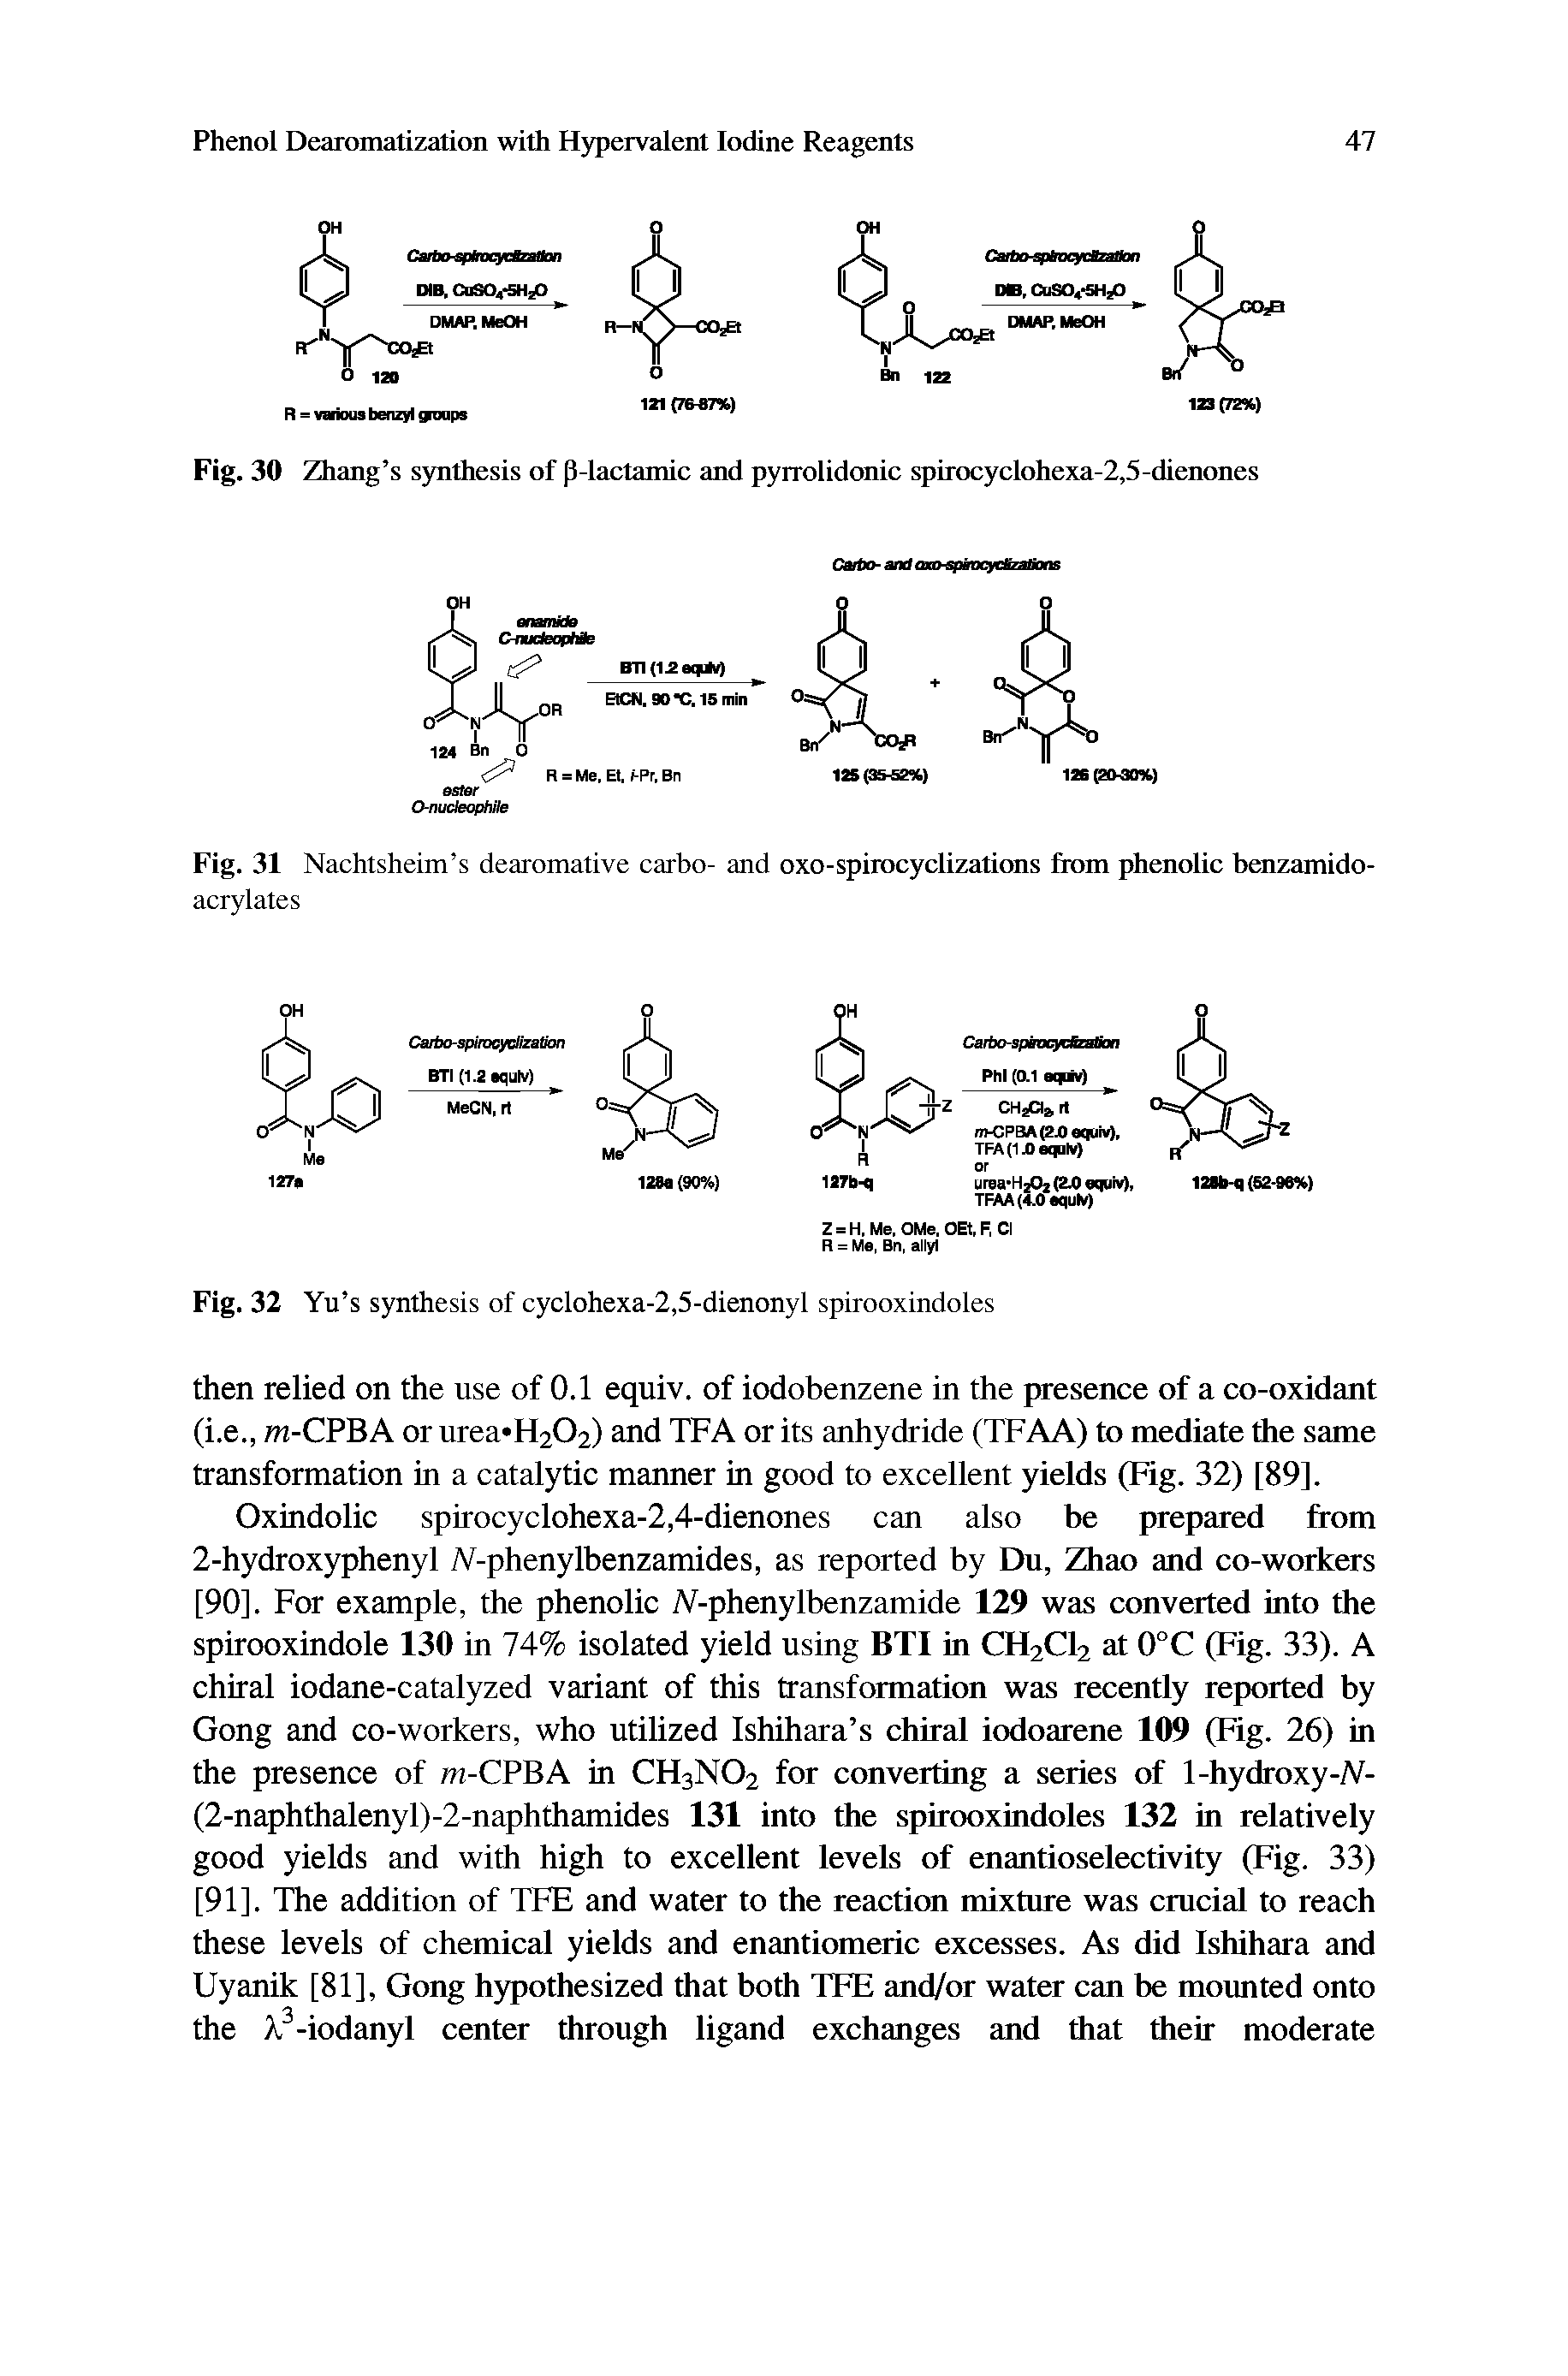 Fig. 31 Nachtsheim s dearomative carbo- and oxo-spirocyclizations from phenolic benzamido-acrylates...